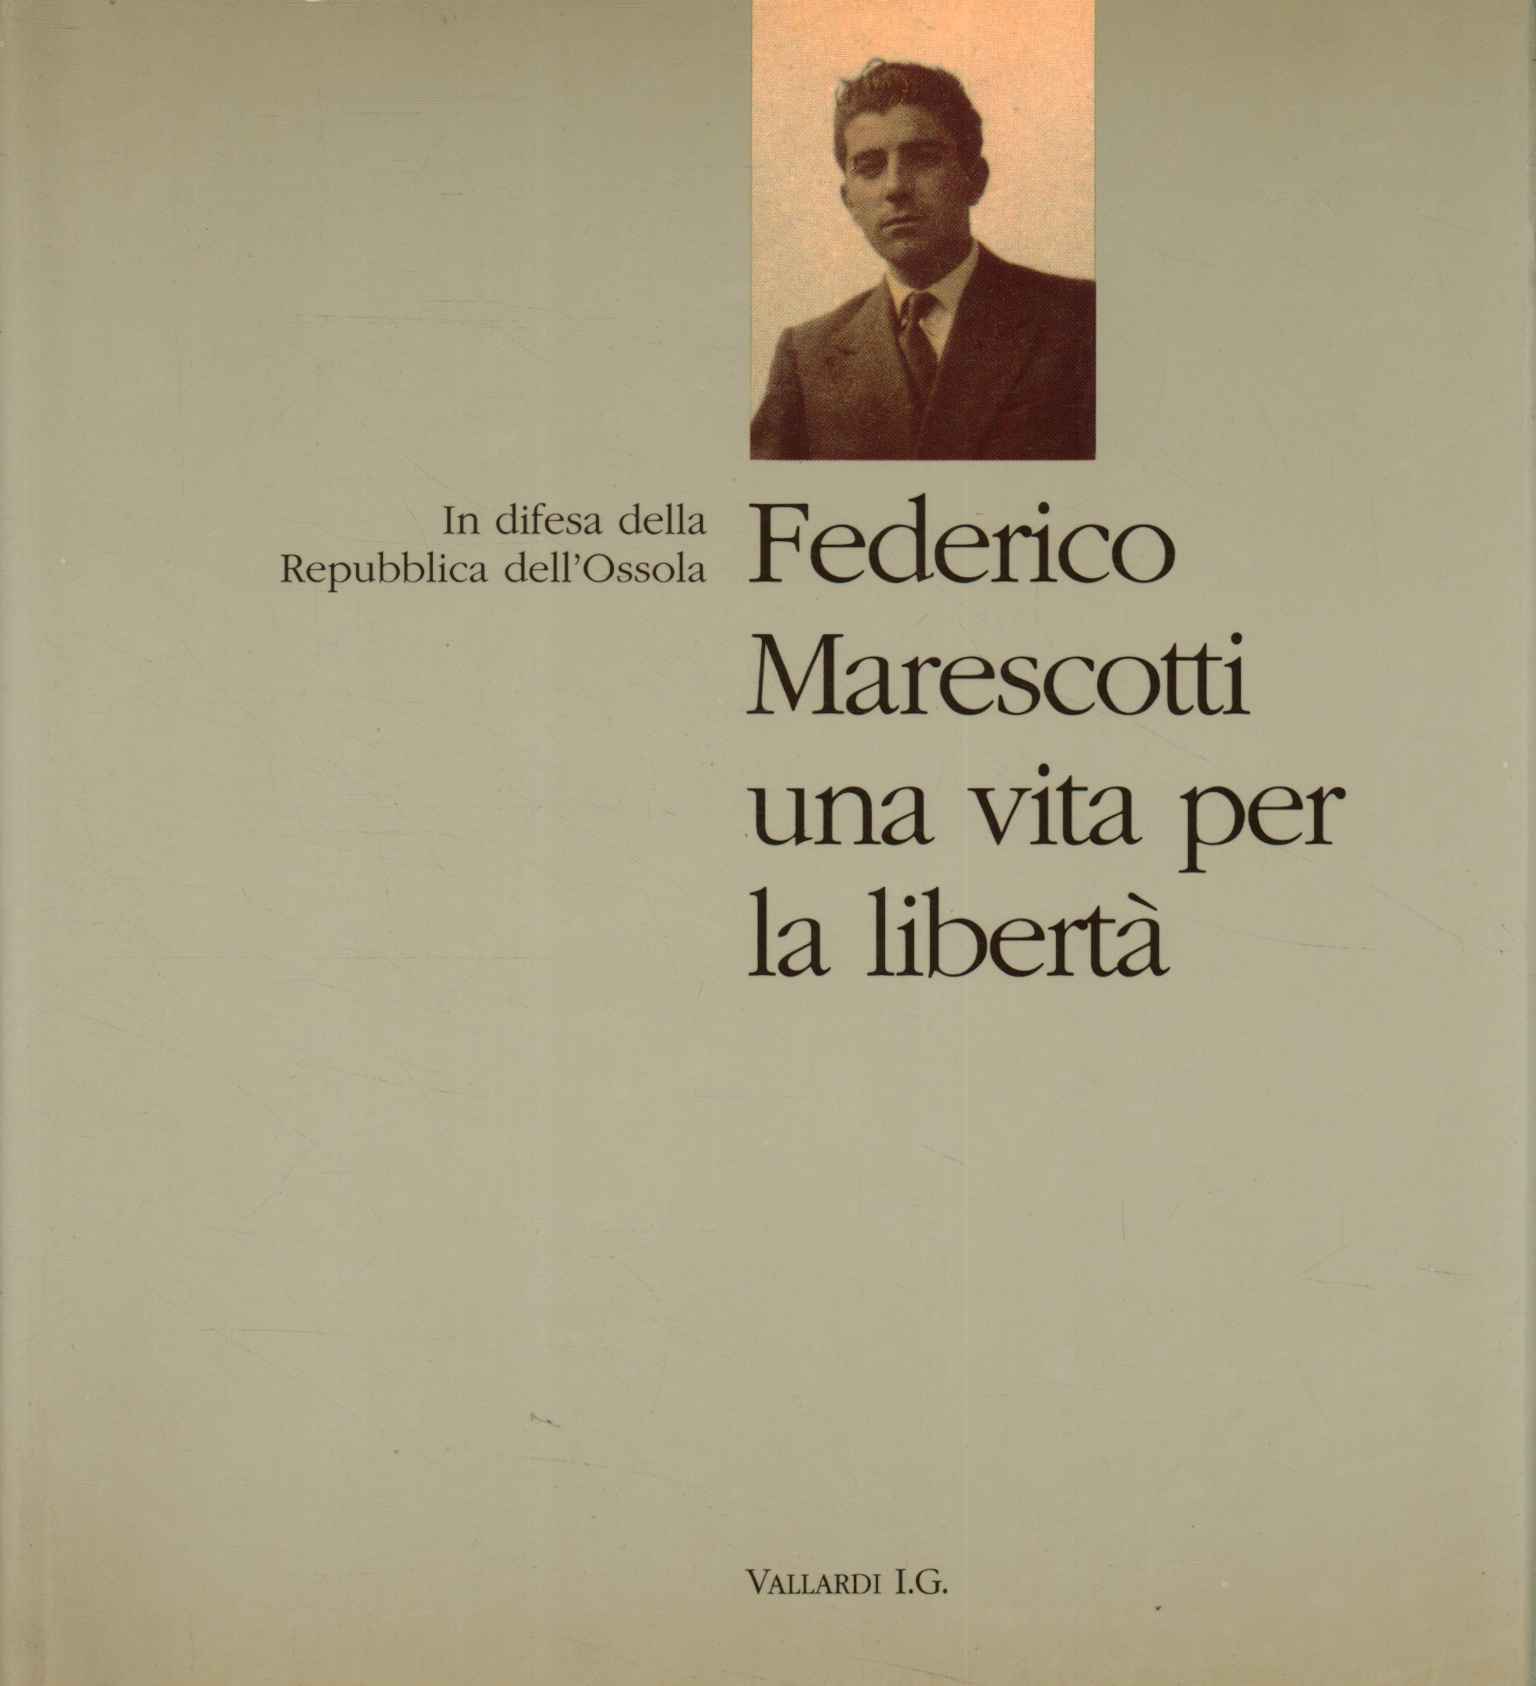 Federico Marescotti: a life for the l